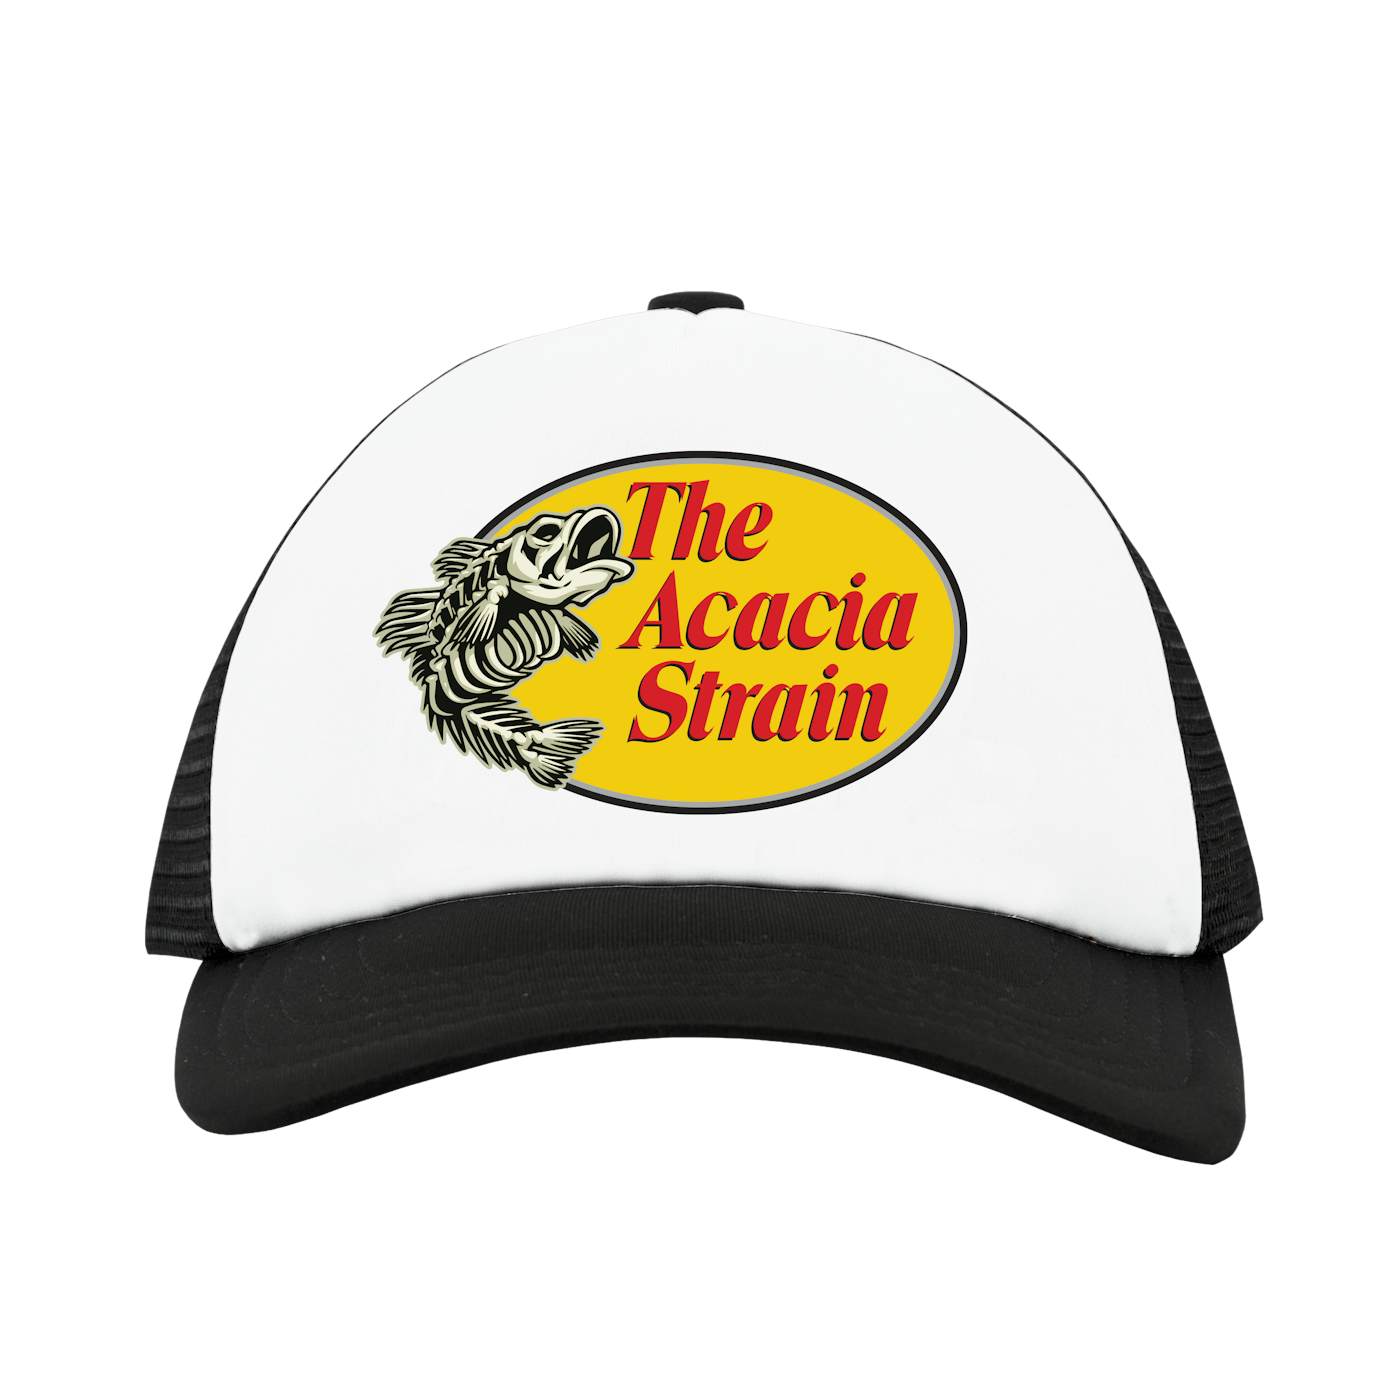 The Acacia Strain Bass Pro Trucker Hat $25.00